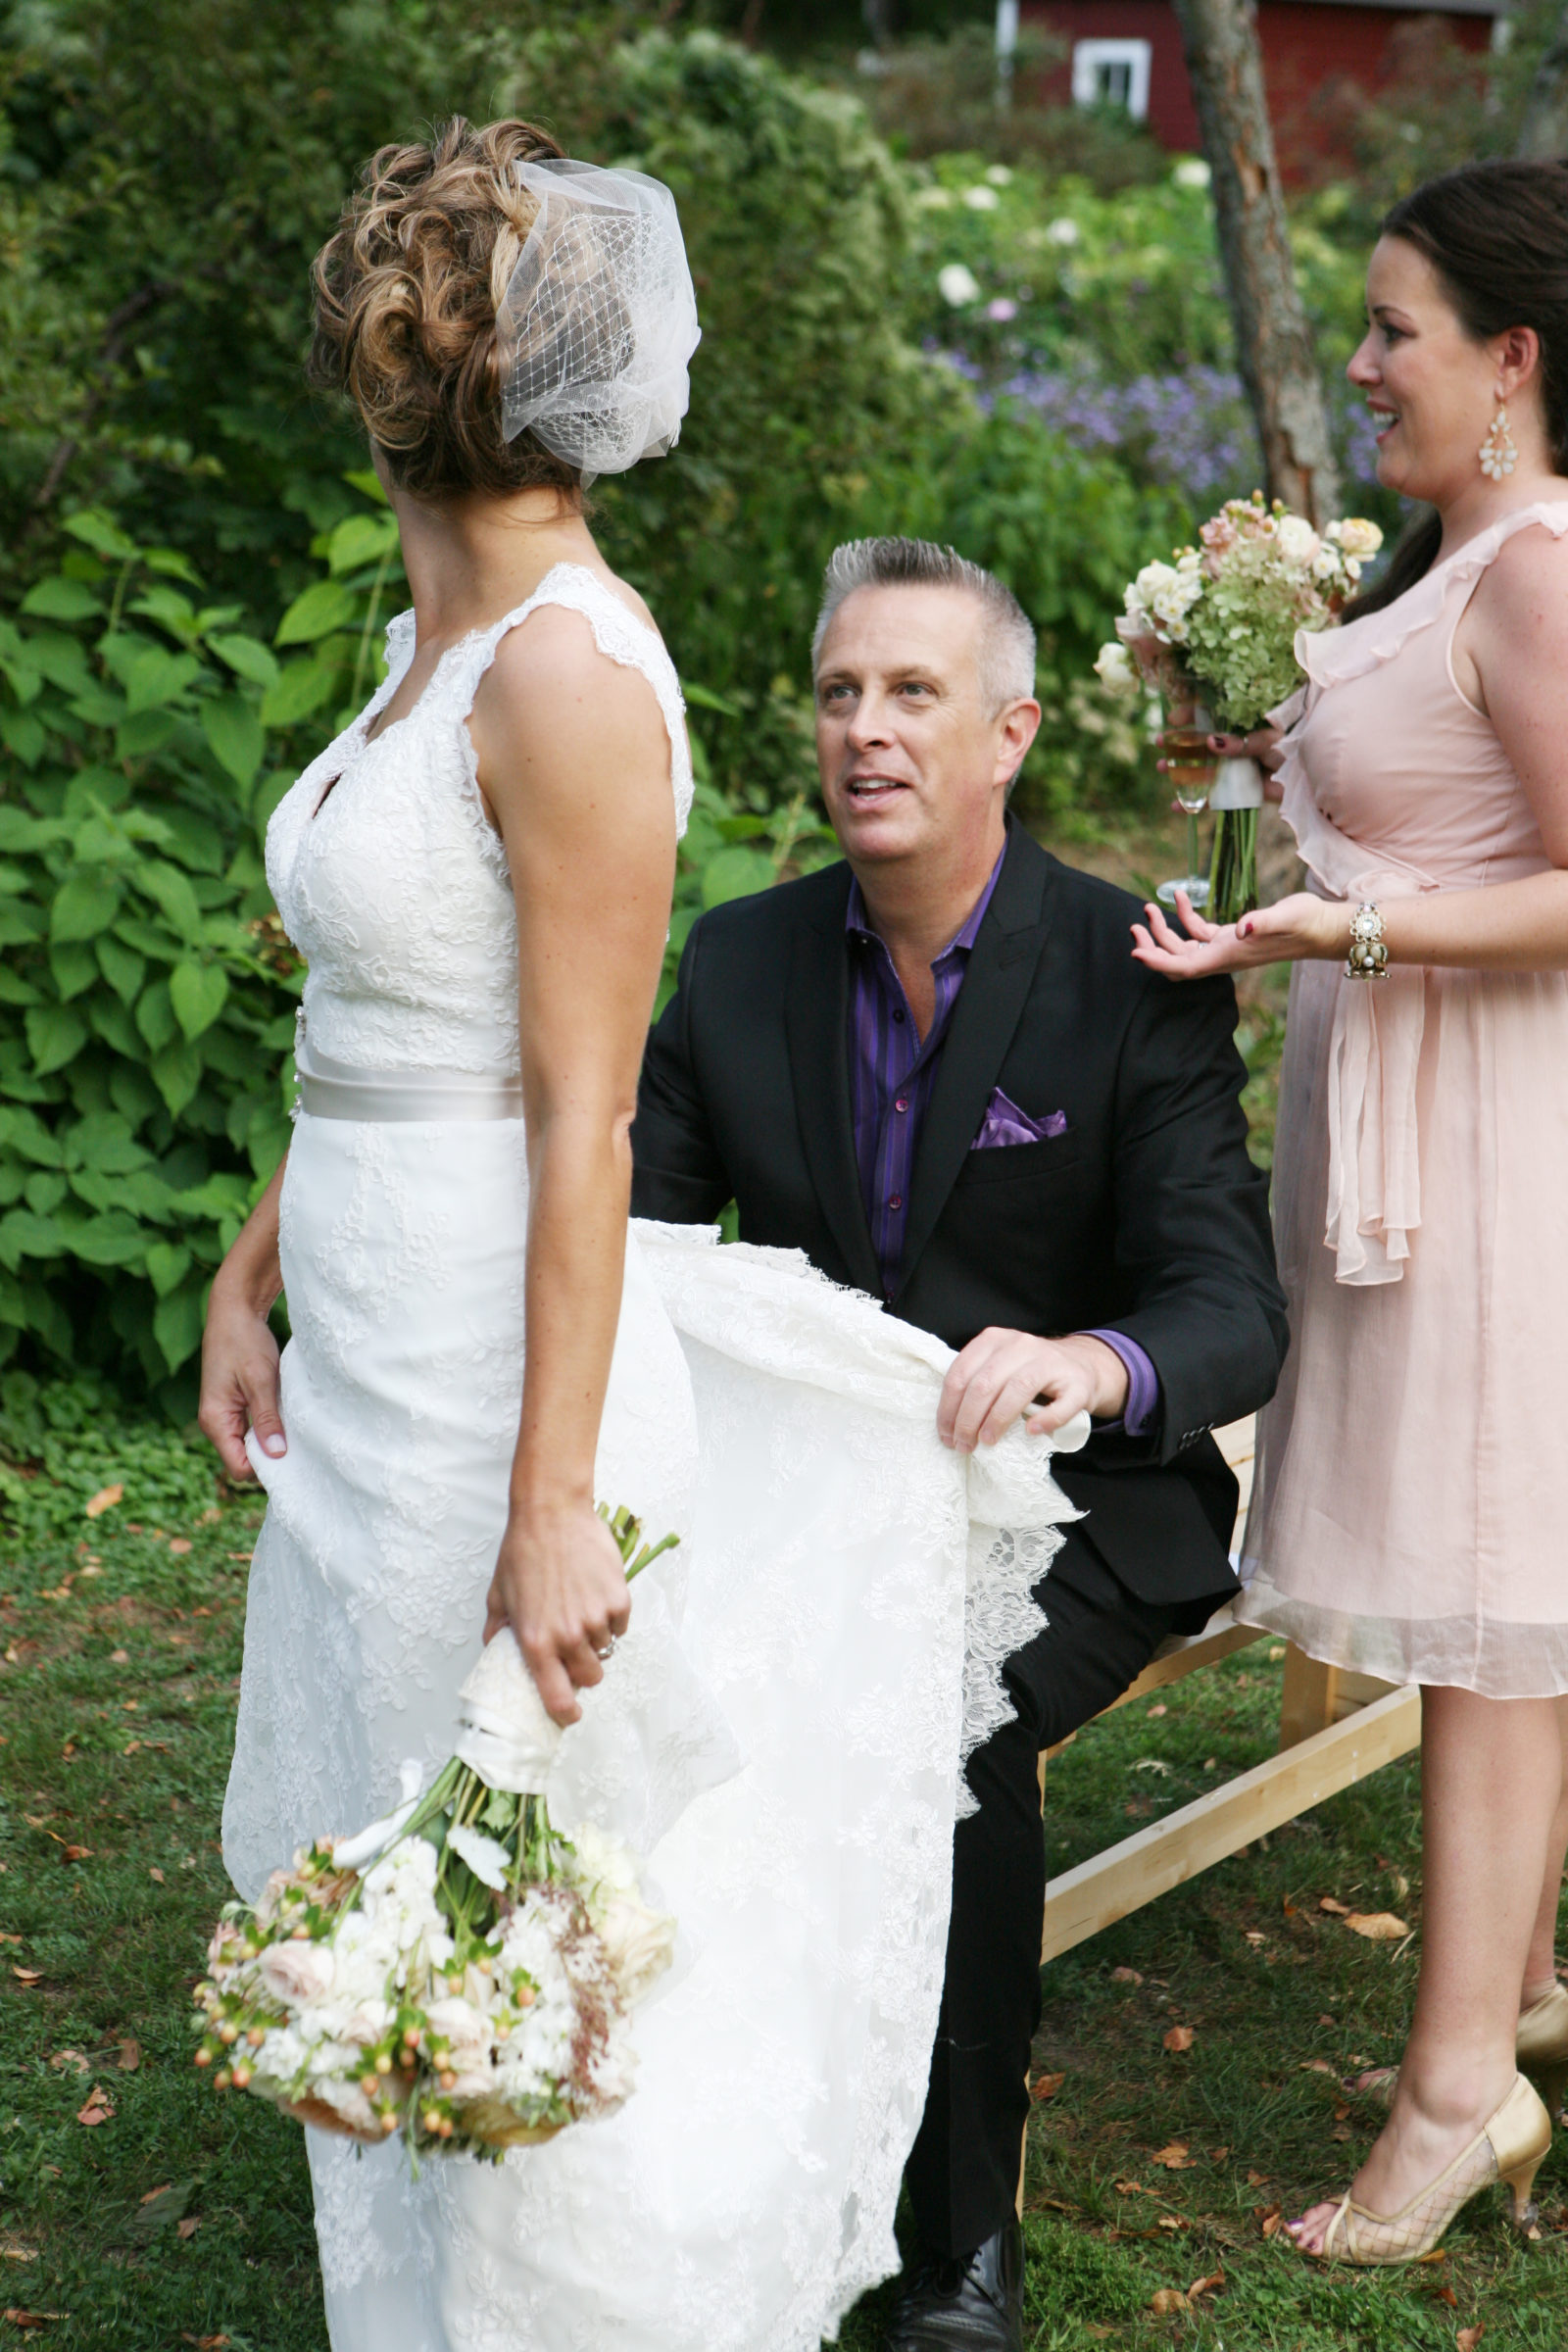 Wedding Guy Bruce Vassar helps bride with dress train